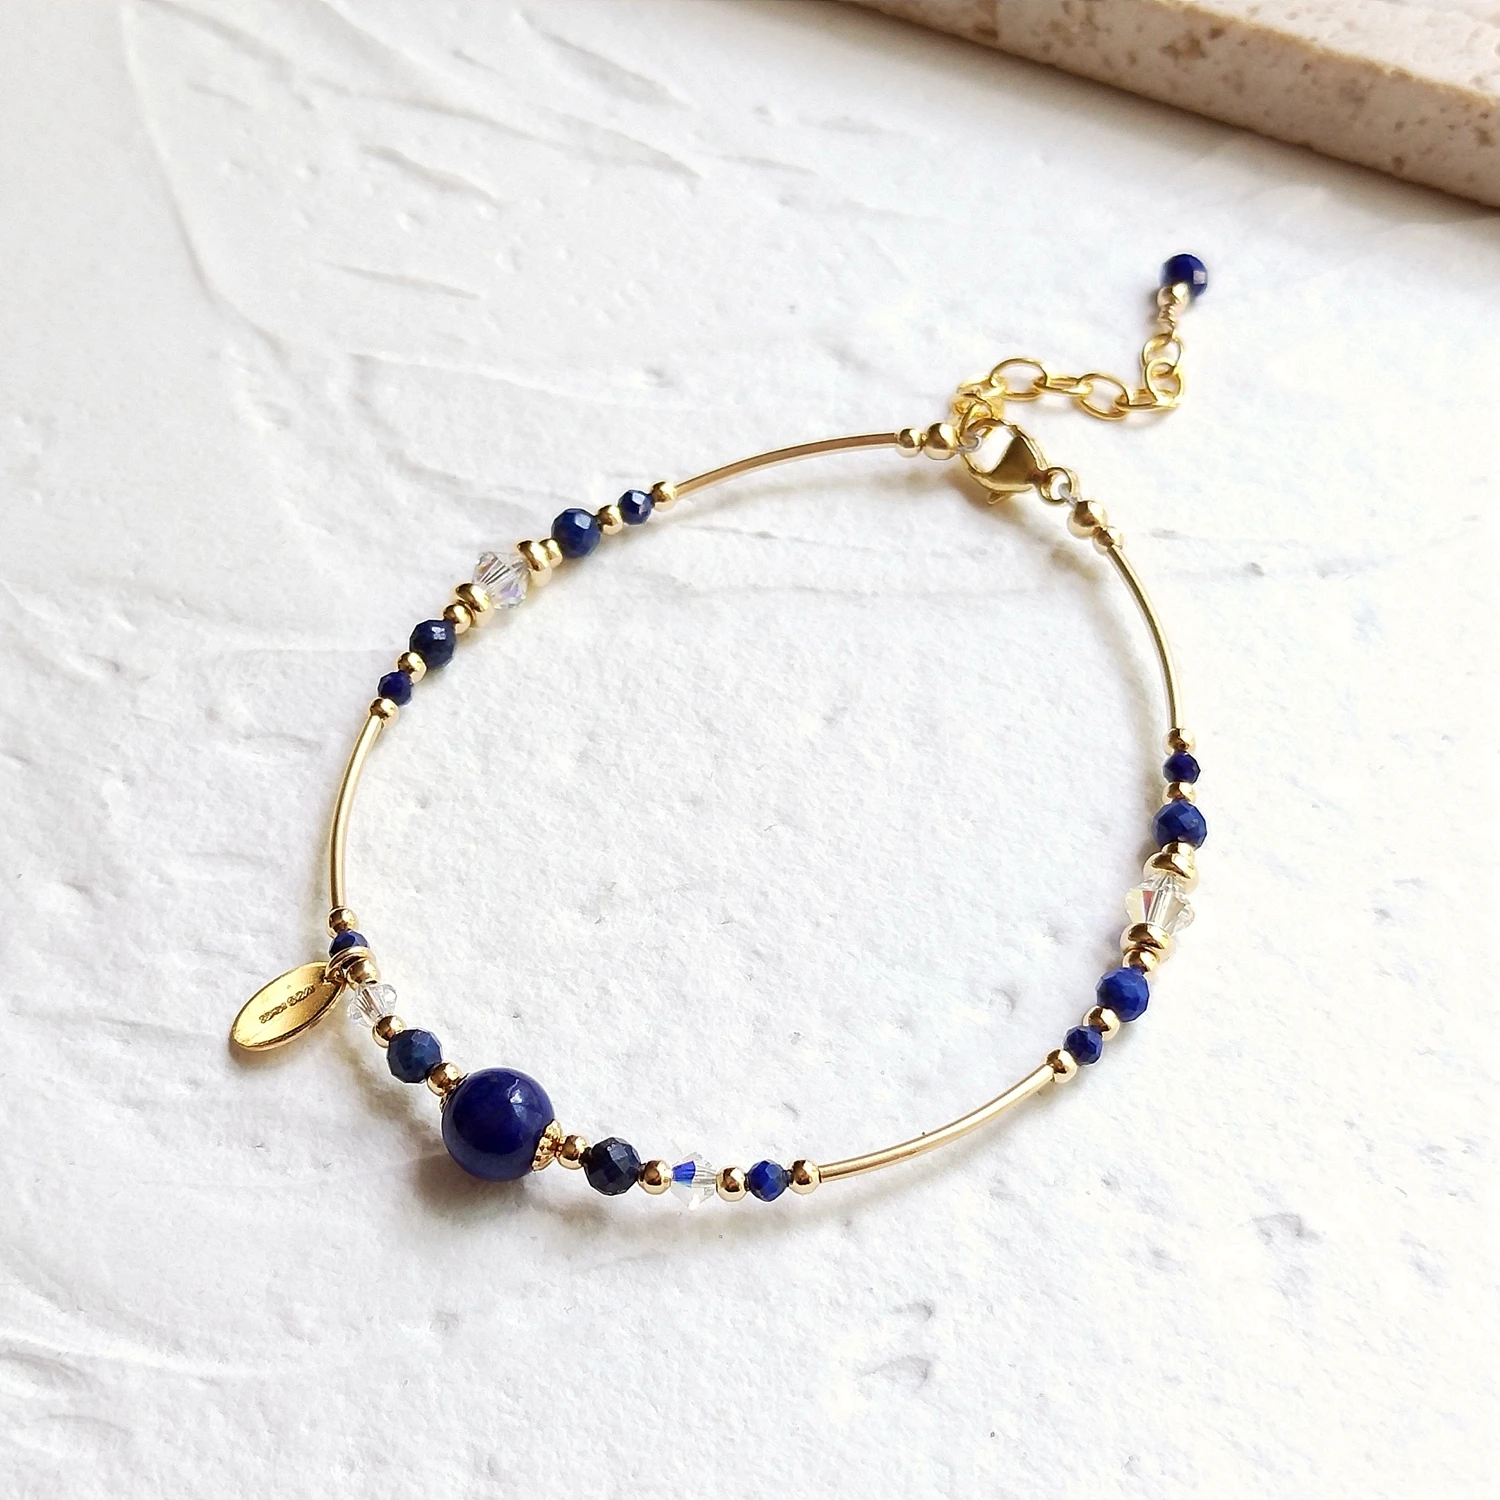 

Lii Ji Lapis Lazuli Crystal 14K Gold Filled Bracelet 17+3cm Natural Stone Handmade Delicate Jewelry For Women Gift